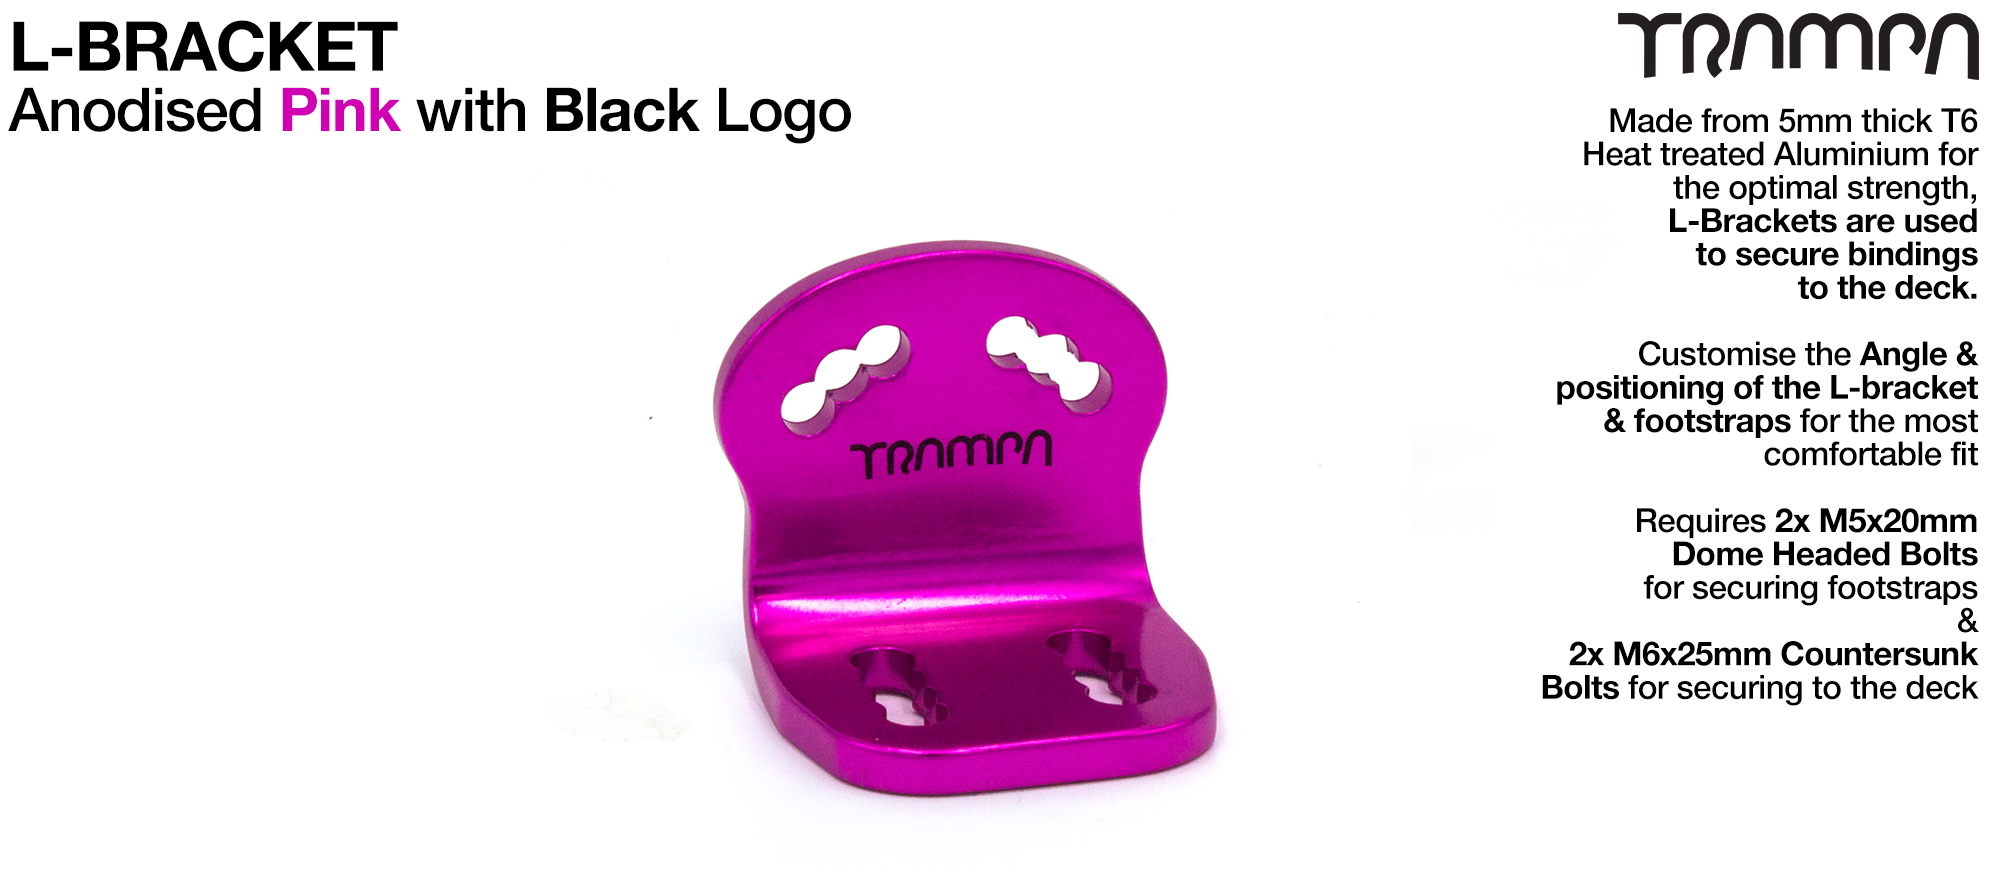 L Bracket - Anodised PINK with BLACK logo